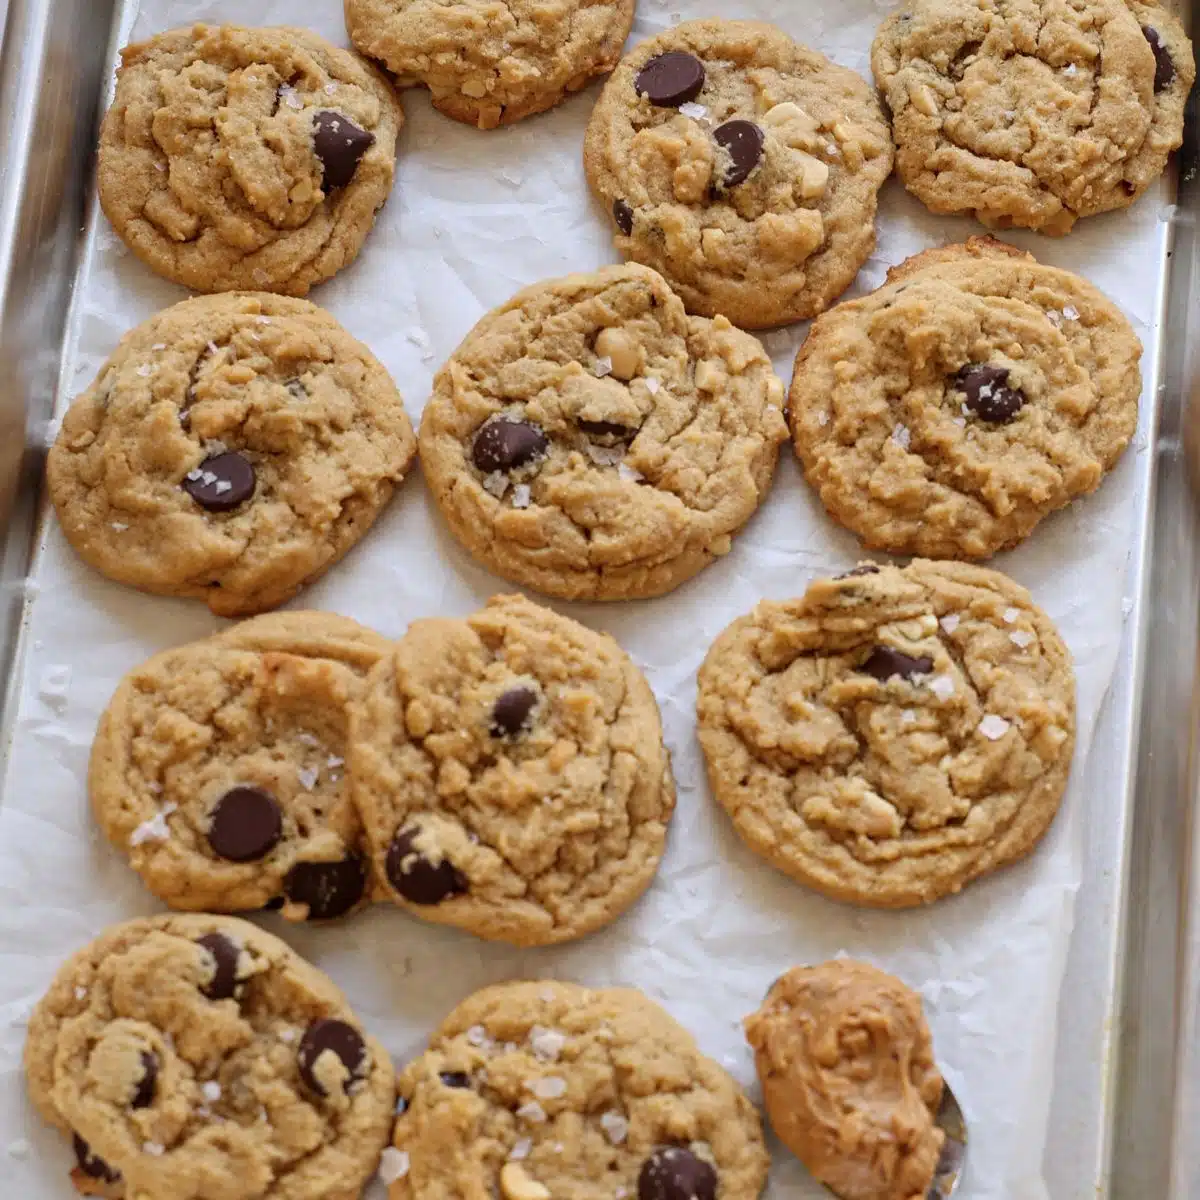 Peanut butter cookies on baking sheet. 